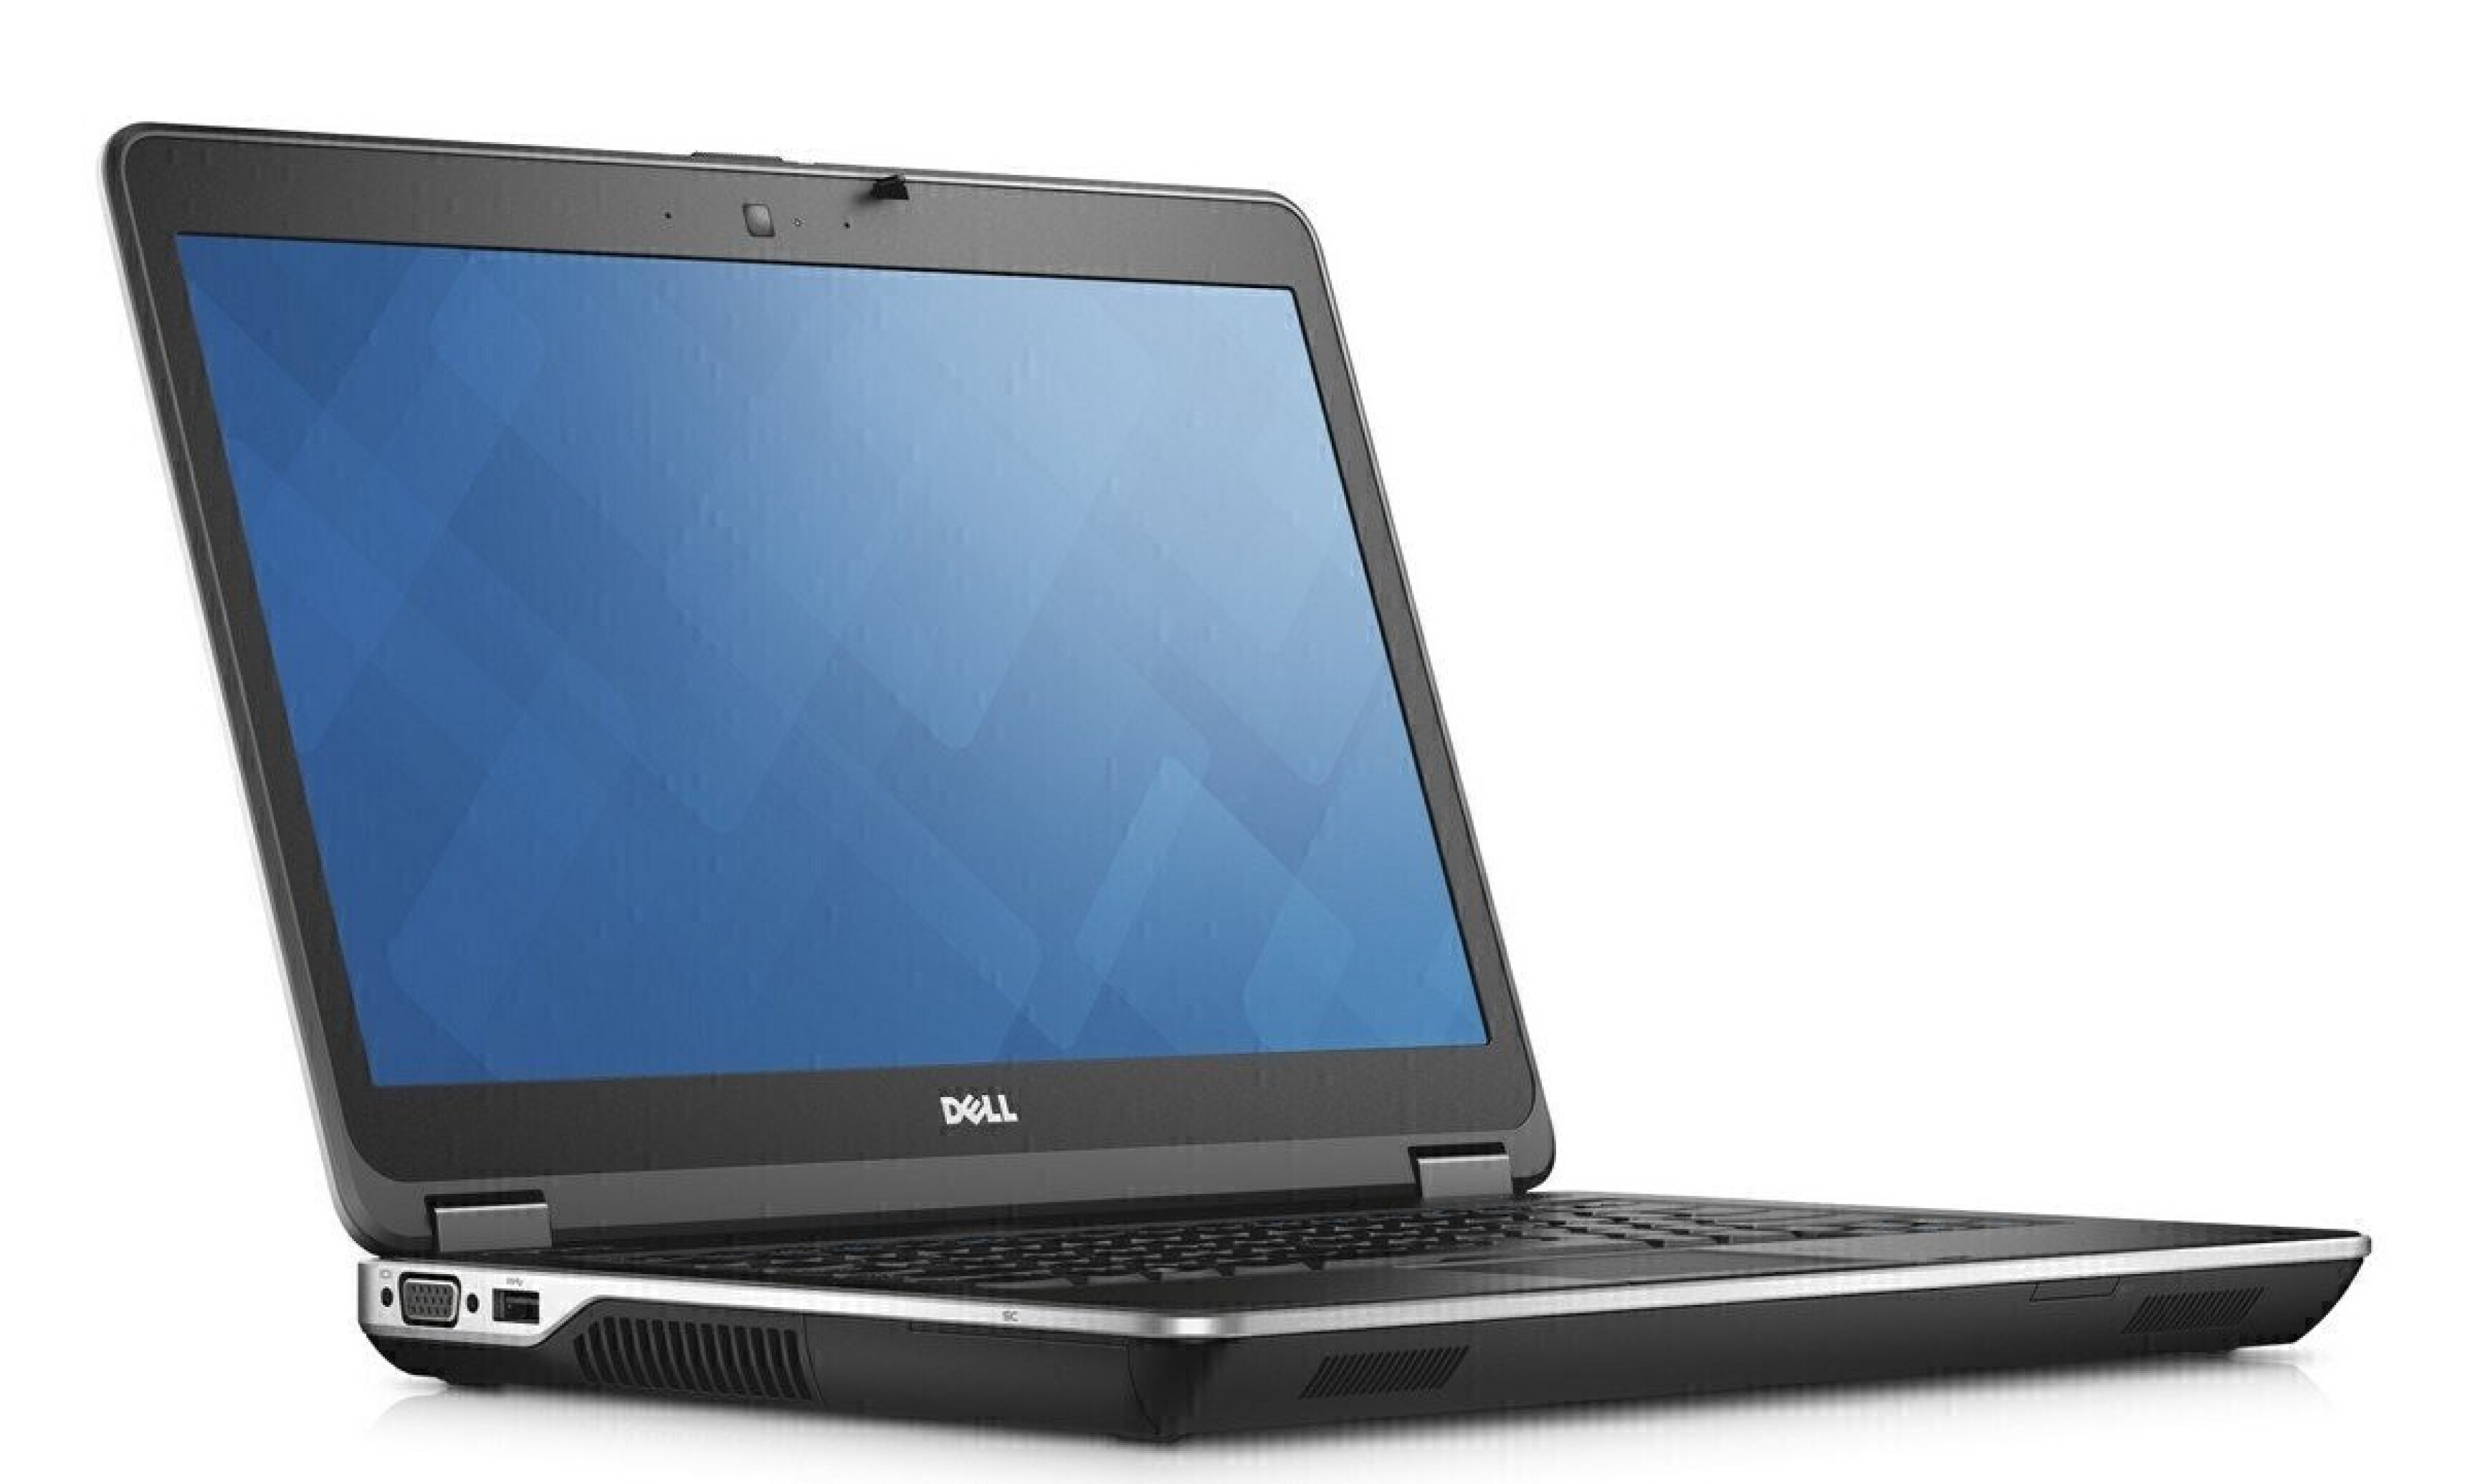  لپ تاپ Dell Latitude E6440 | لاکچری لپ تاپ 